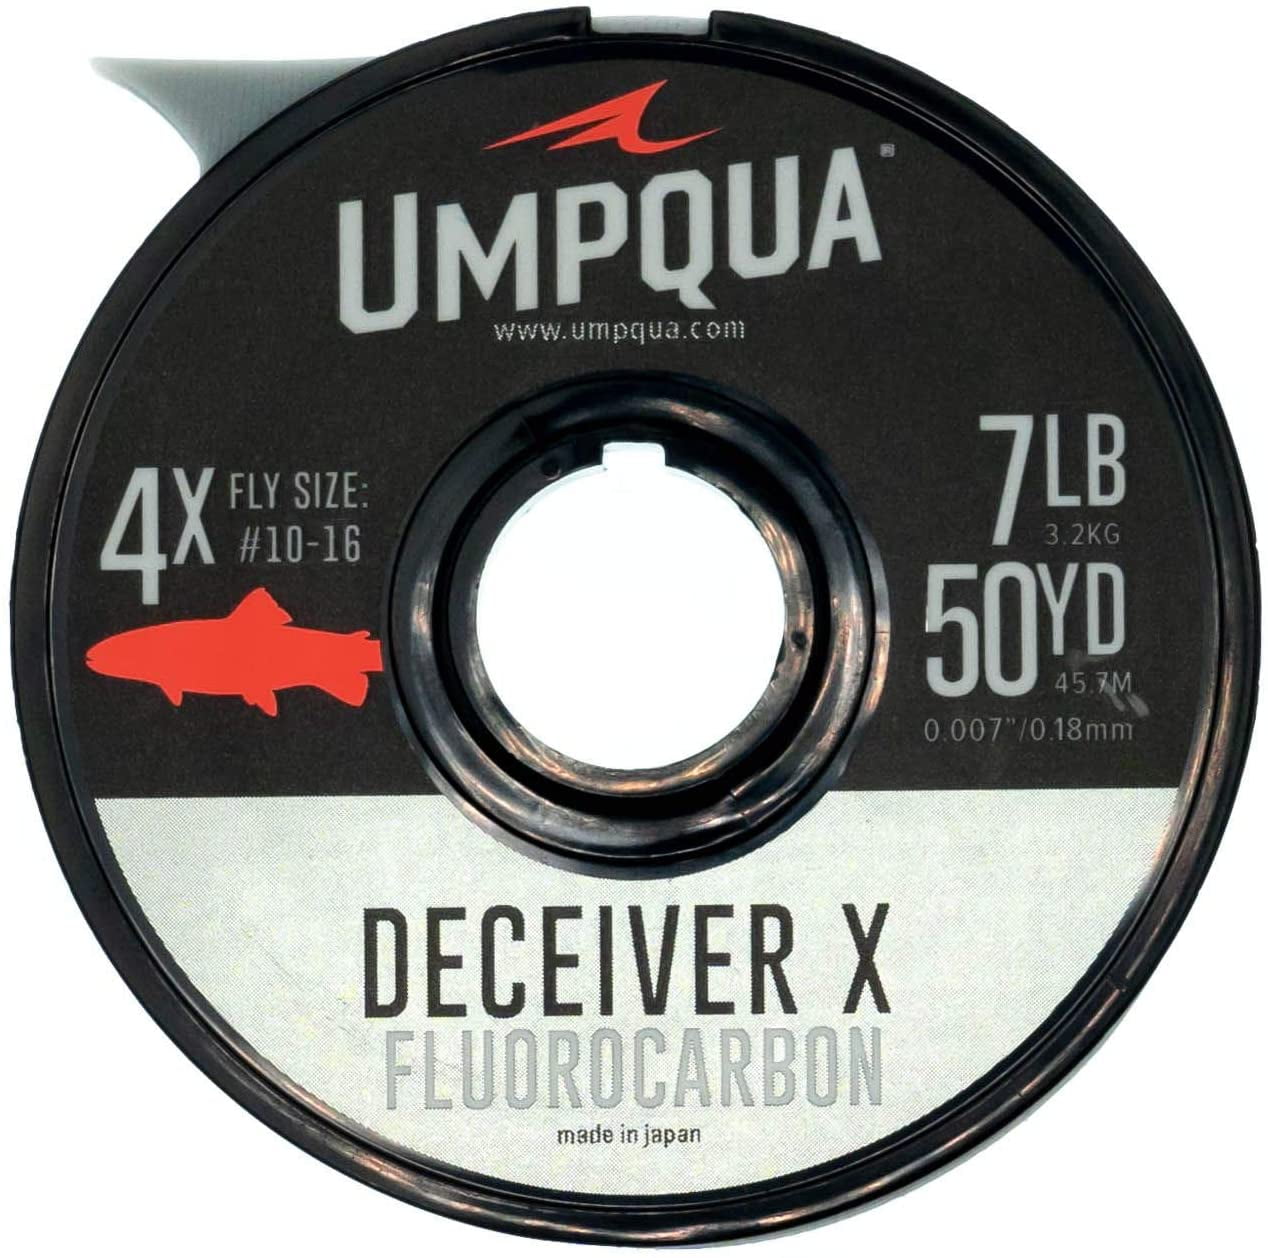 Umpqua Deceiver X Fluorocarbon Fly Fishing Tippet 50YDS 6X